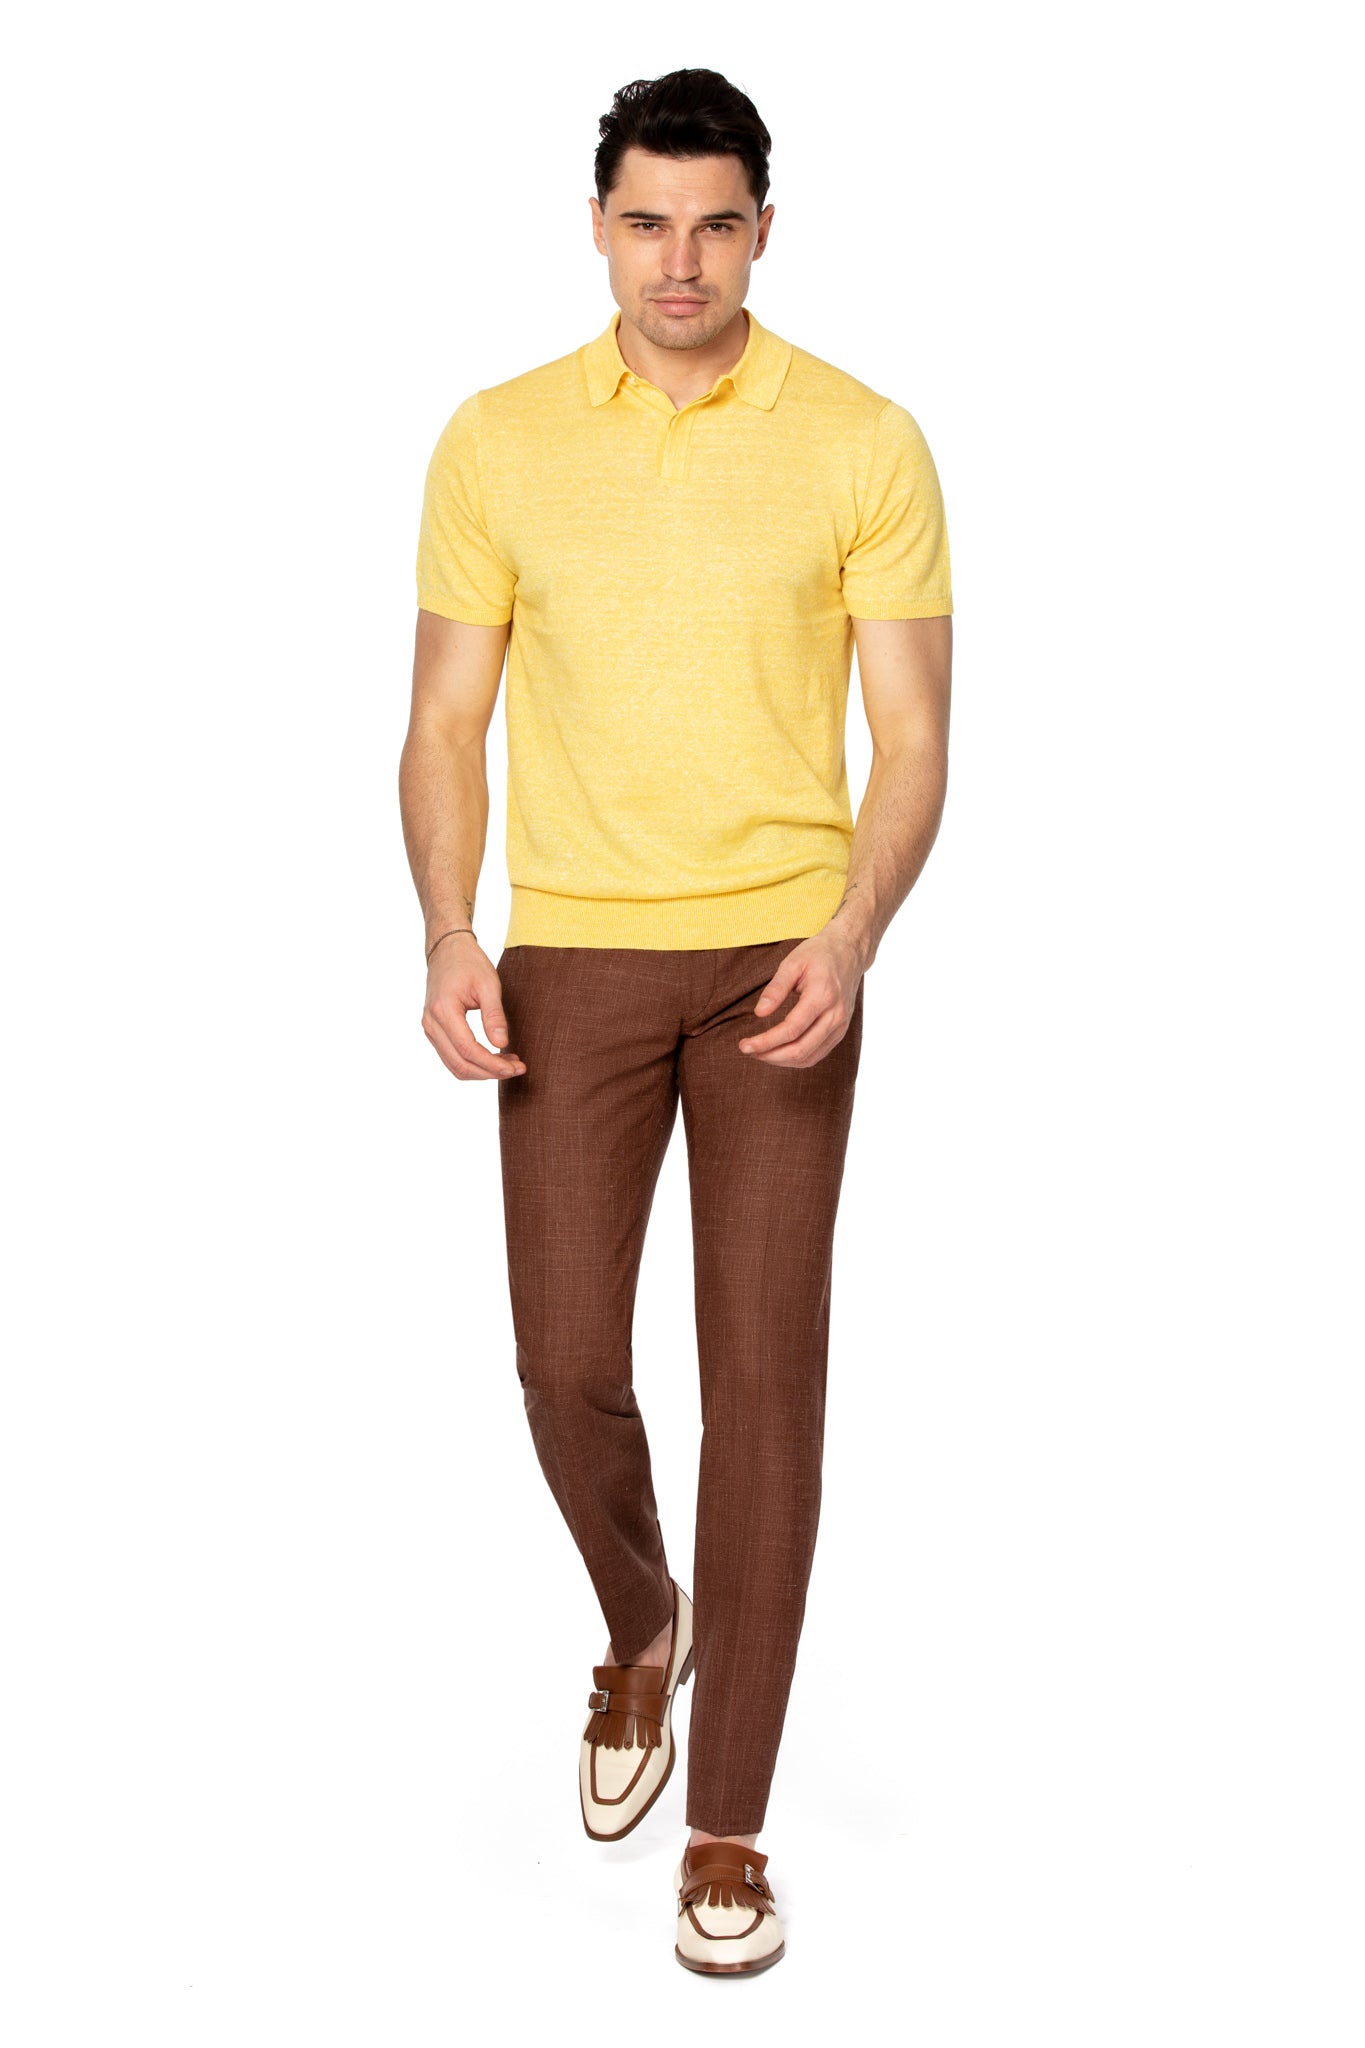 Yellow polo shirt in merino wool and linen